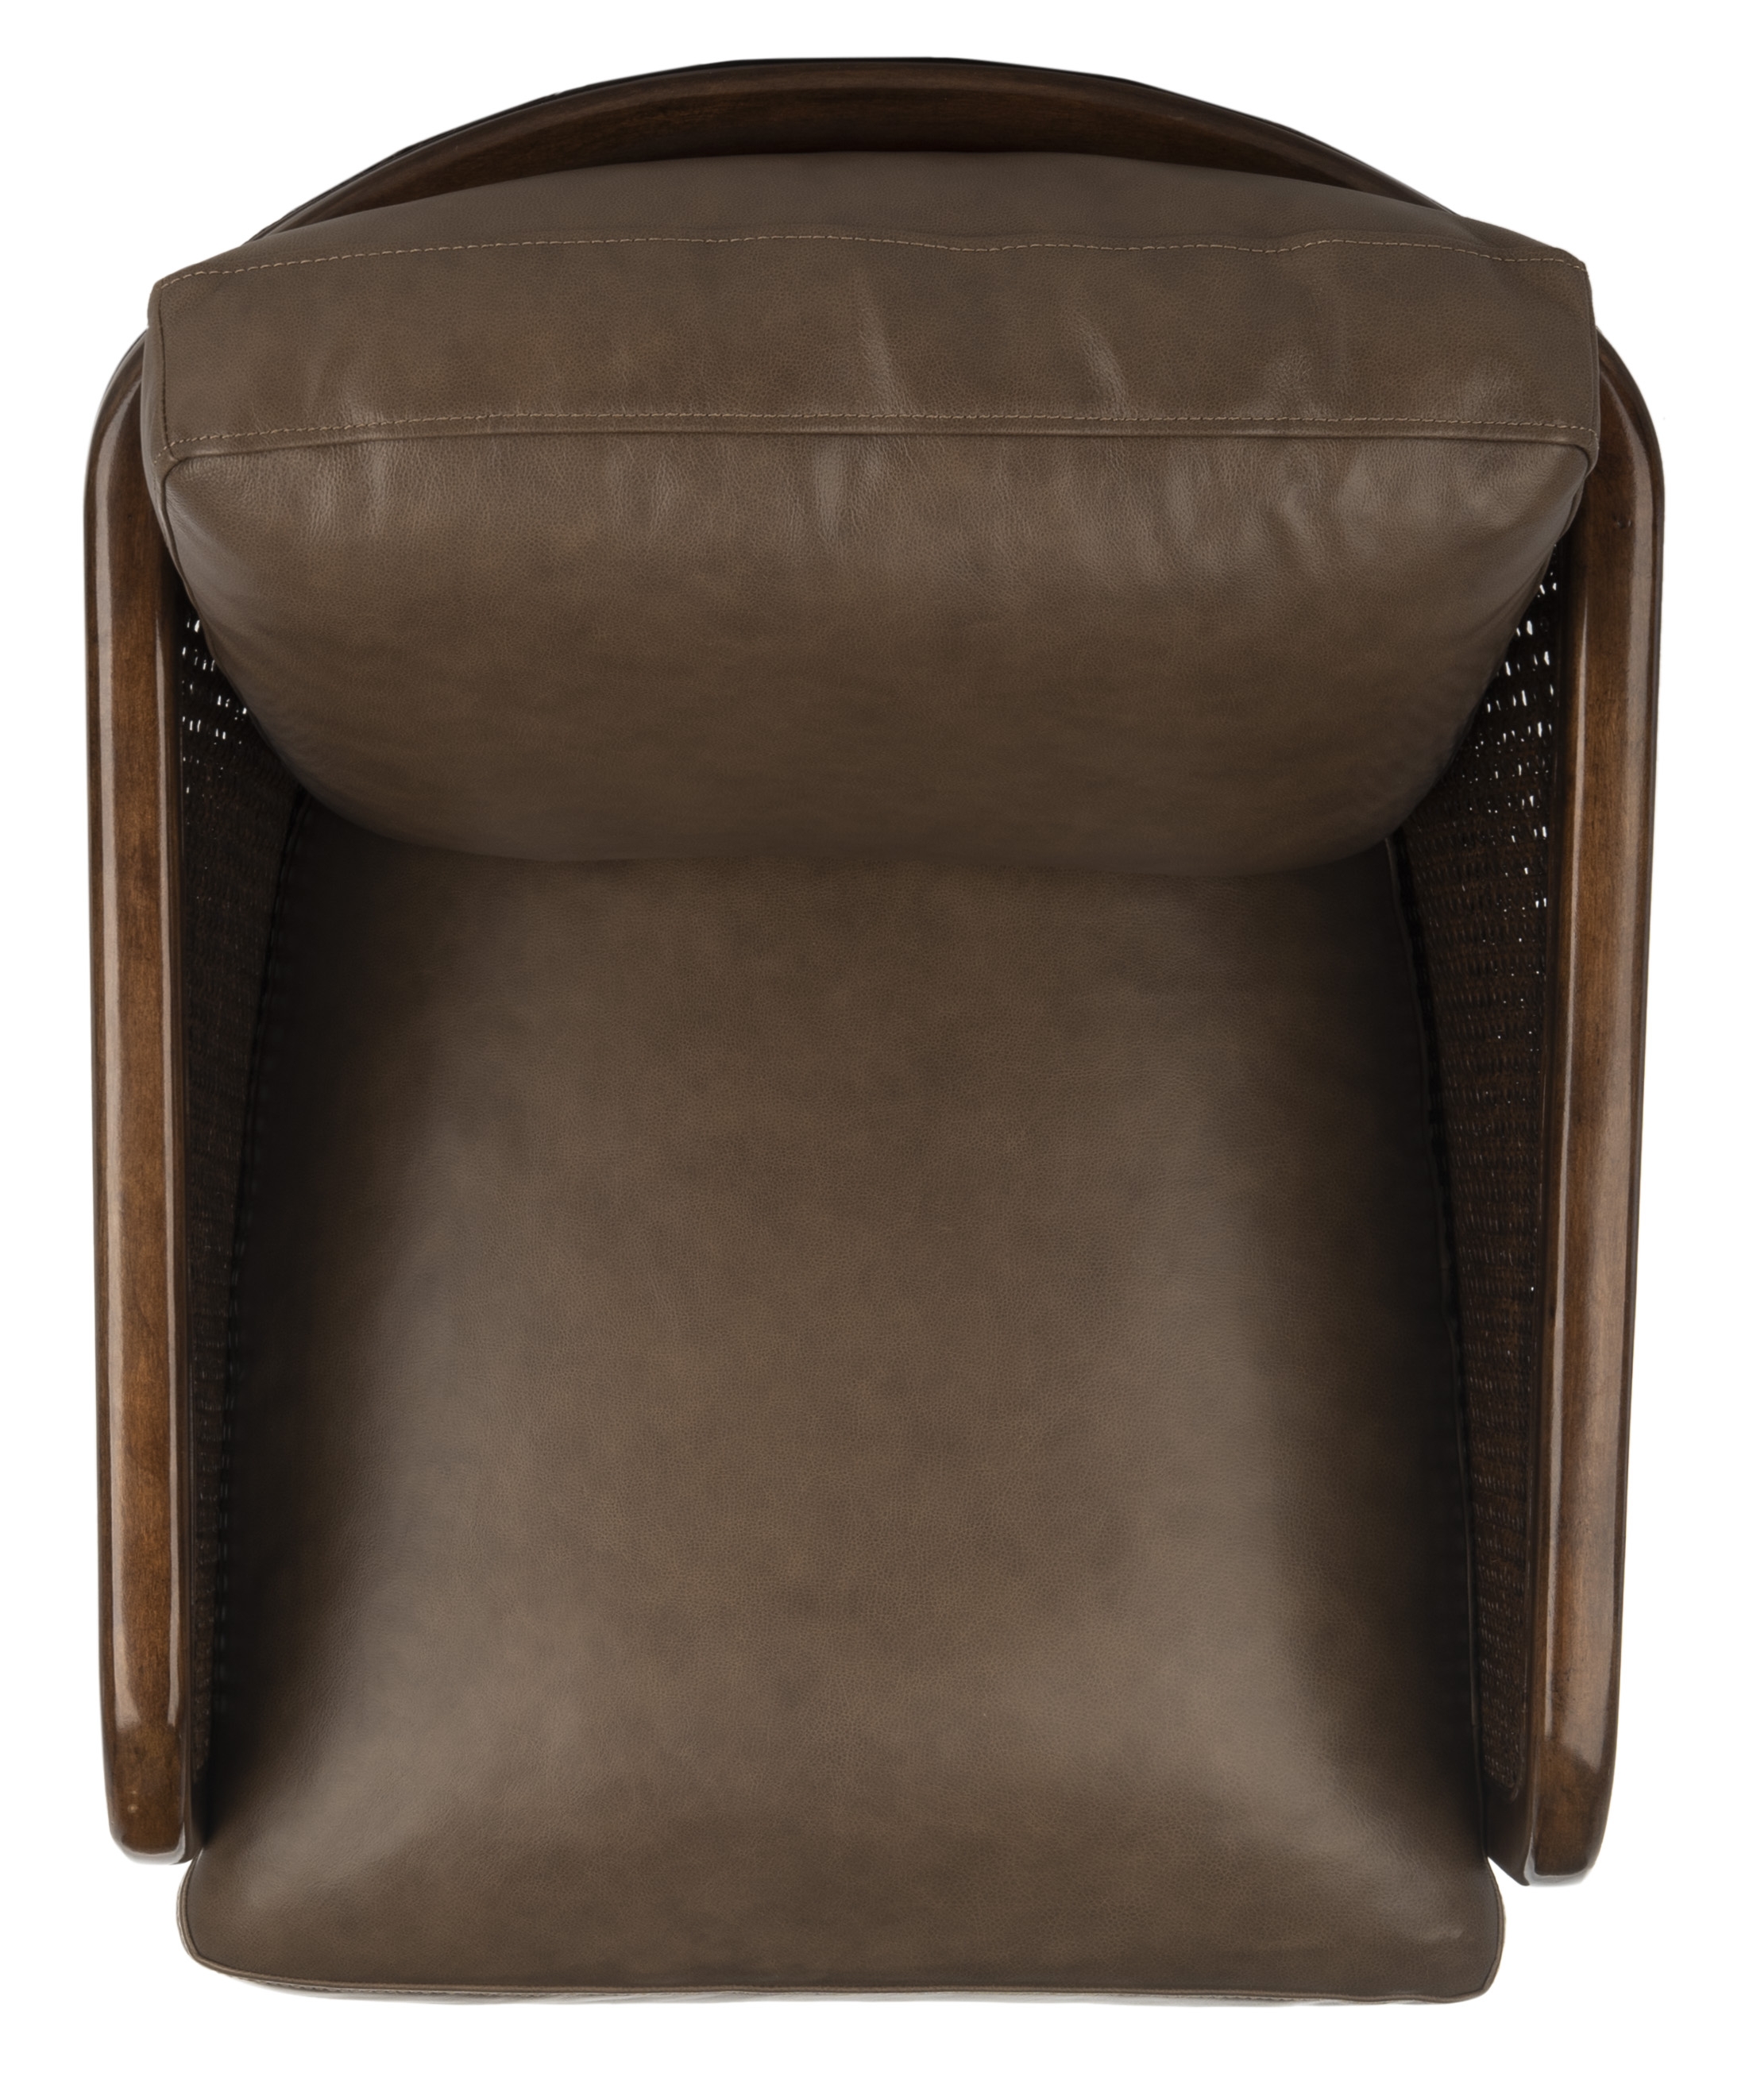 Caruso Barrel Back Chair - Dark Brown - Arlo Home - Image 7